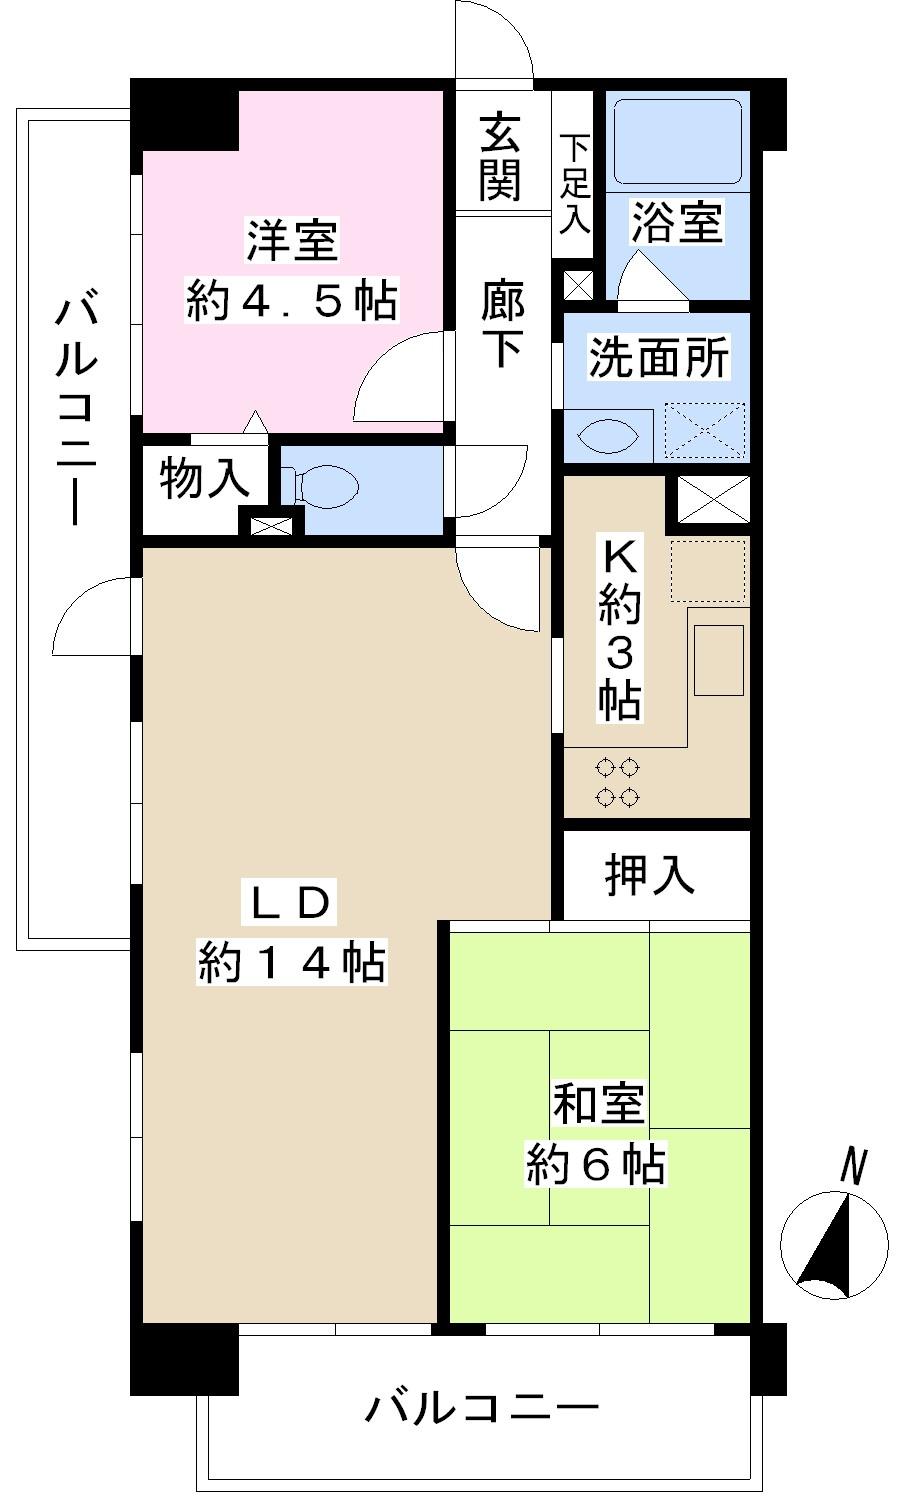 Floor plan. 2LDK, Price 19.2 million yen, Footprint 60.5 sq m , Balcony area 12.86 sq m